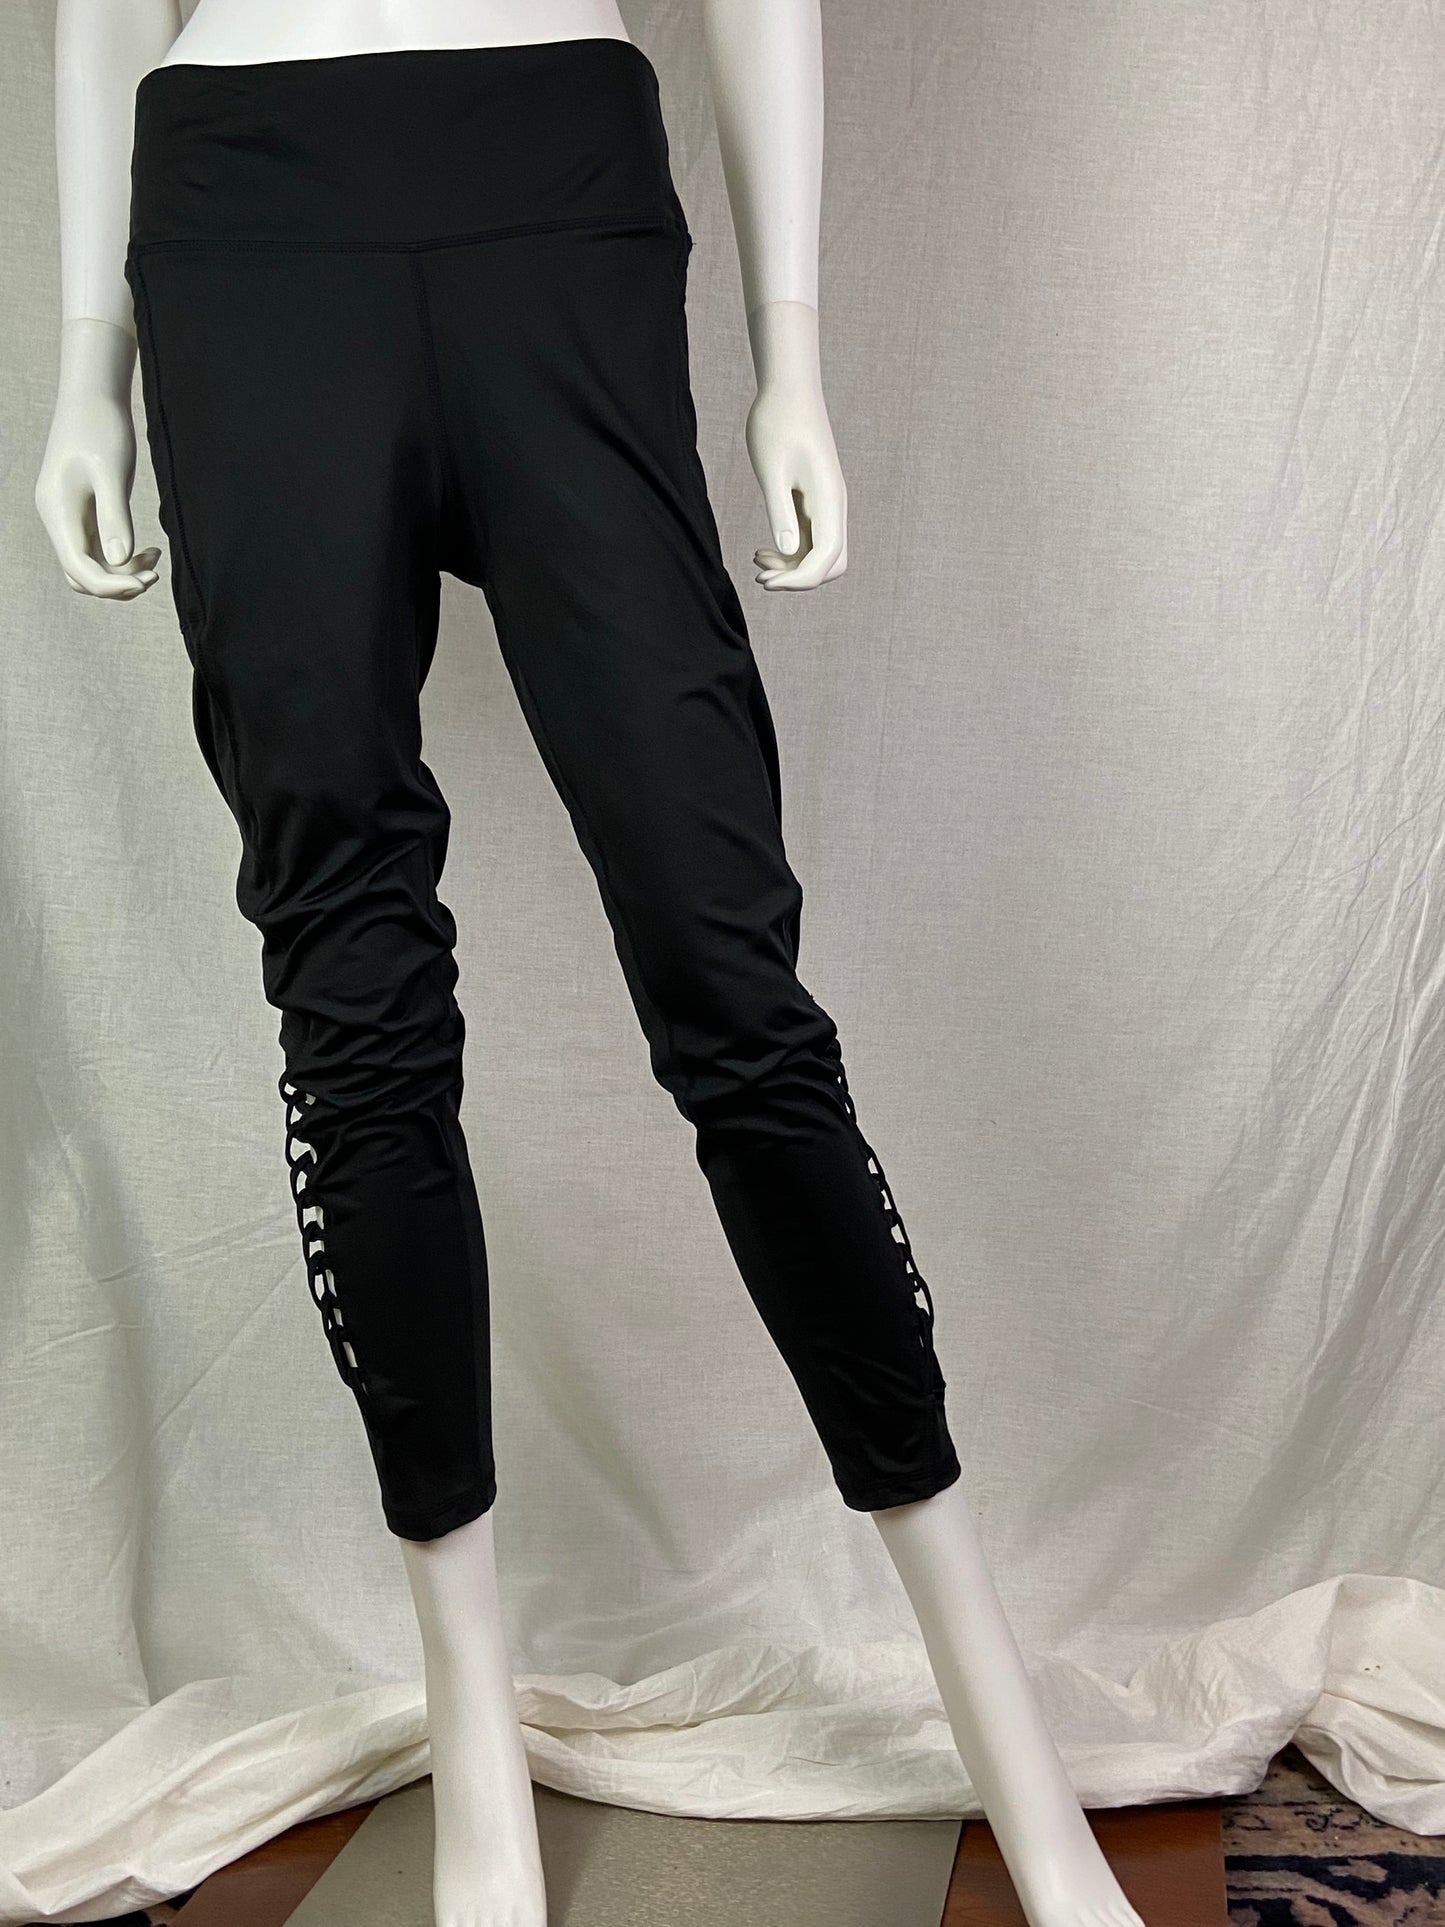 Zone Pro Black Stretch Cut Out Lace Leggings Pants